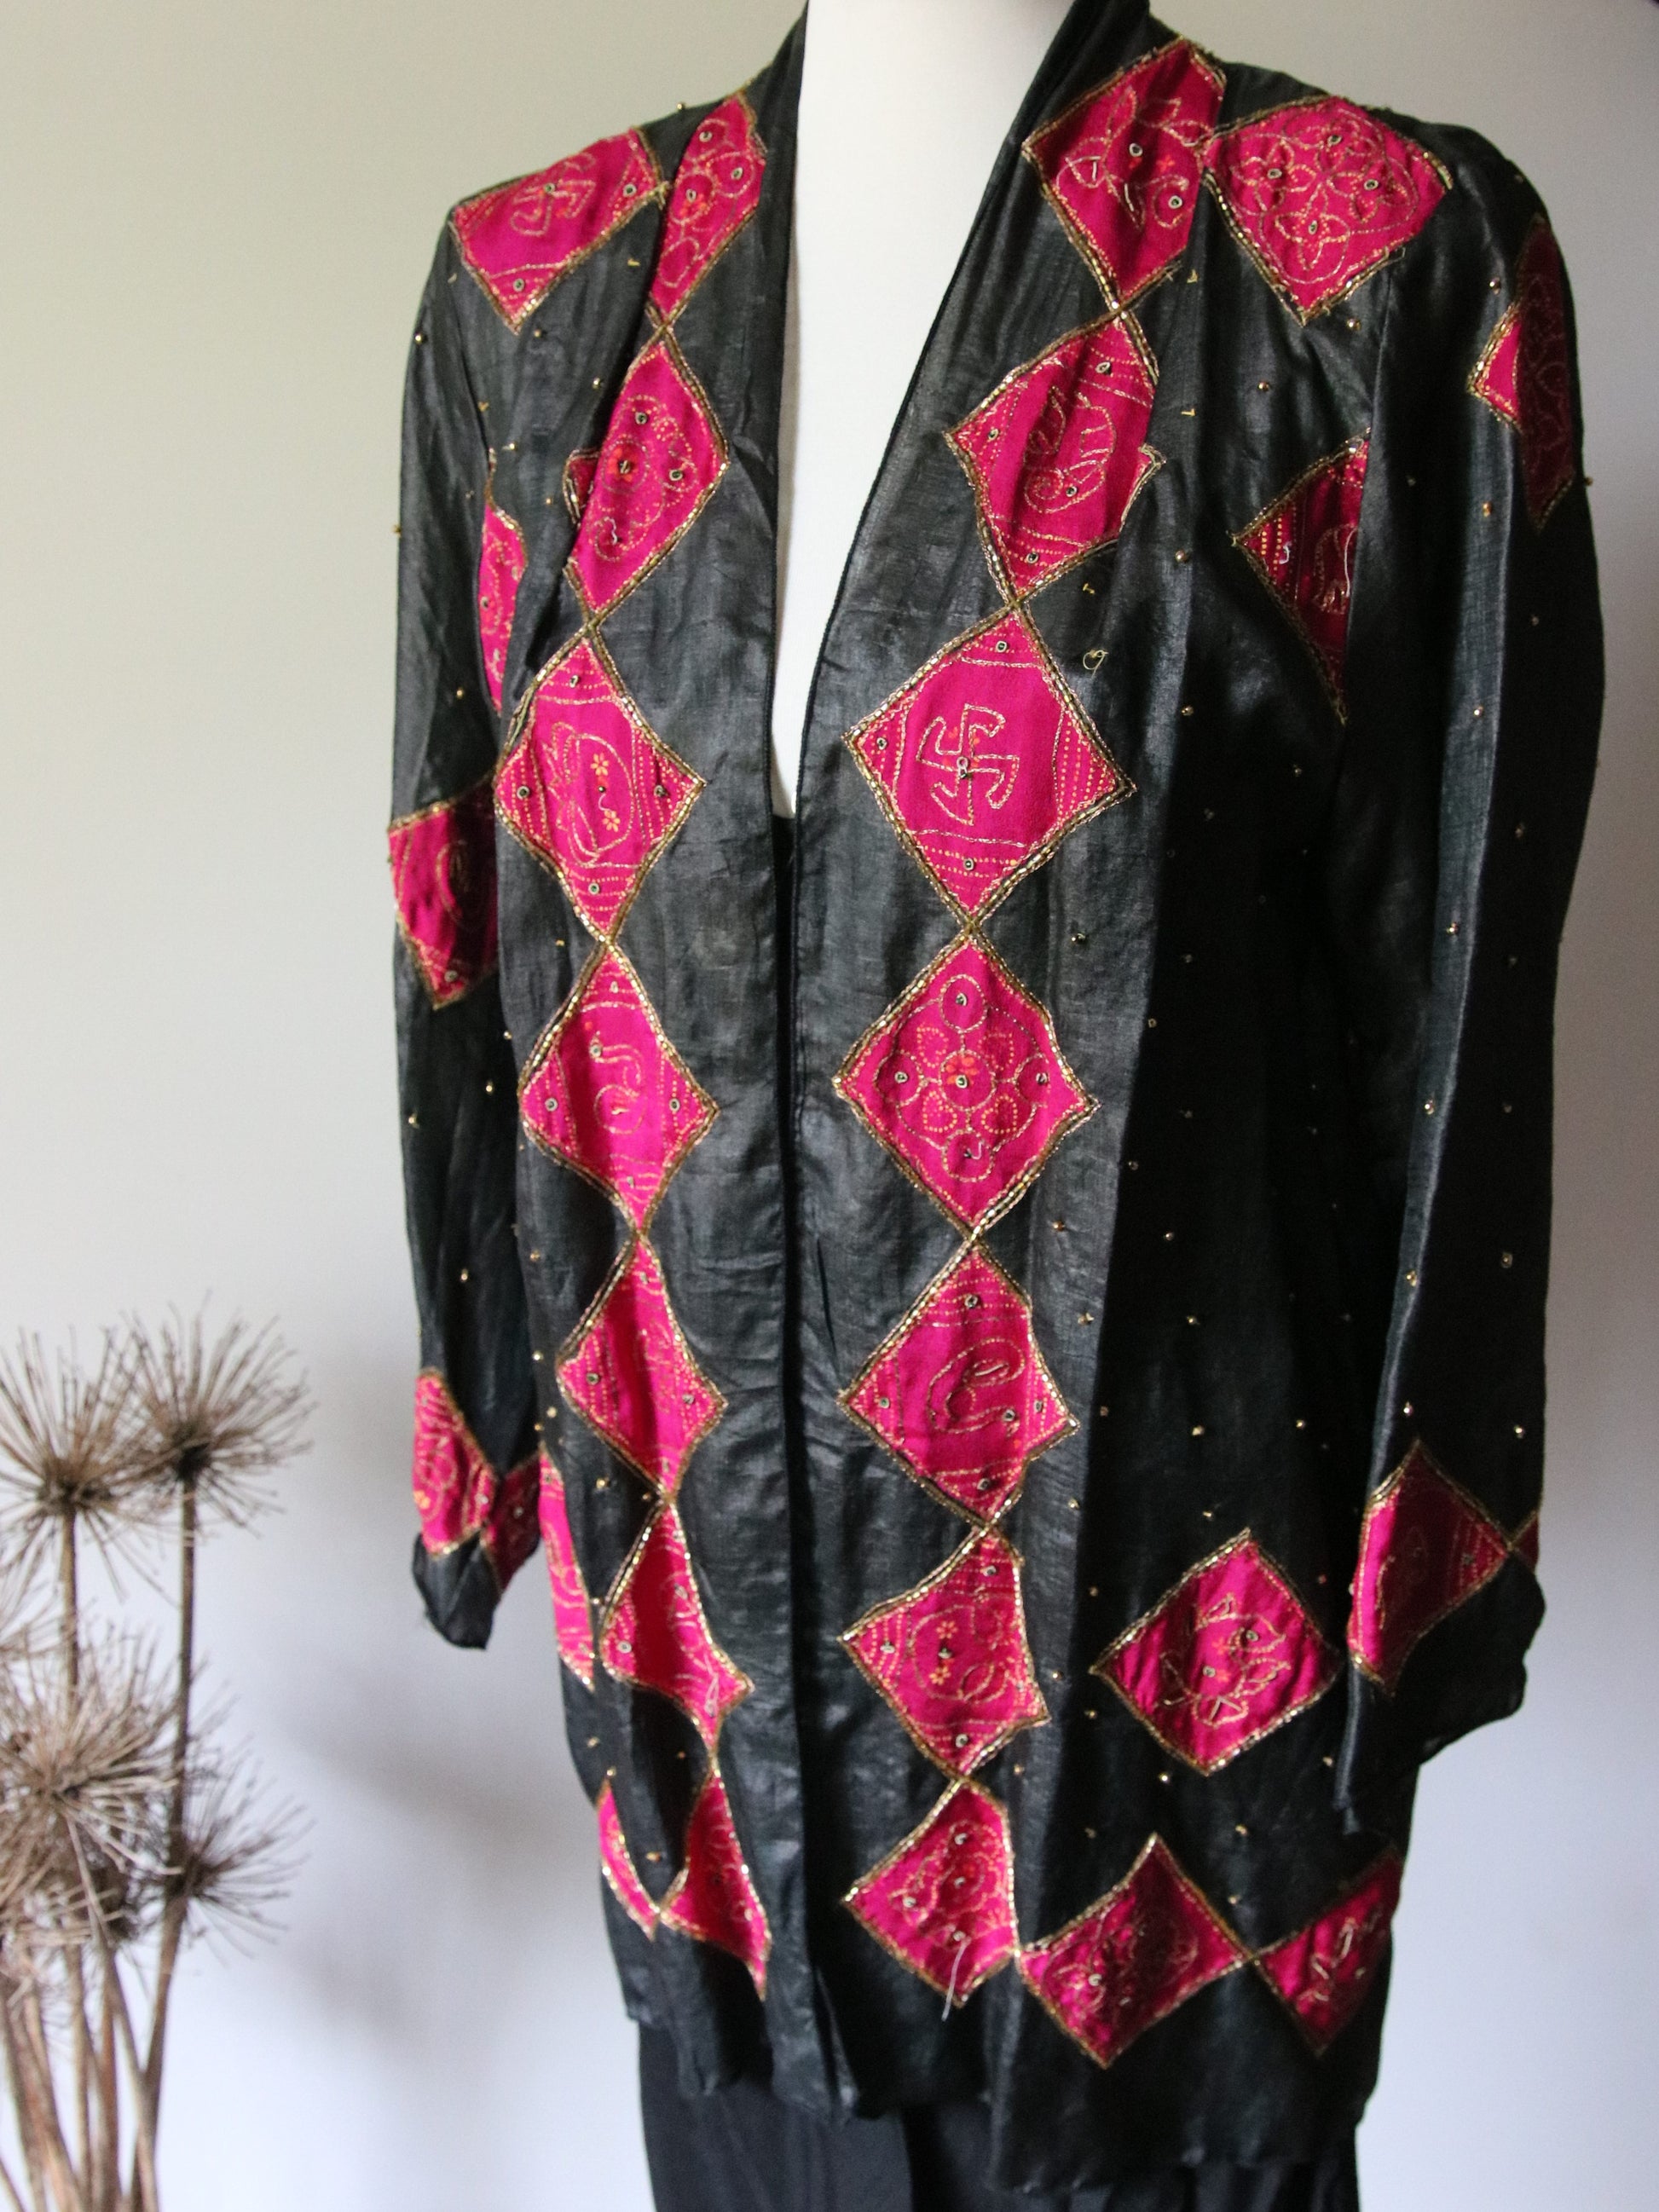 Front view of silk sari jacket black with pink diamonds